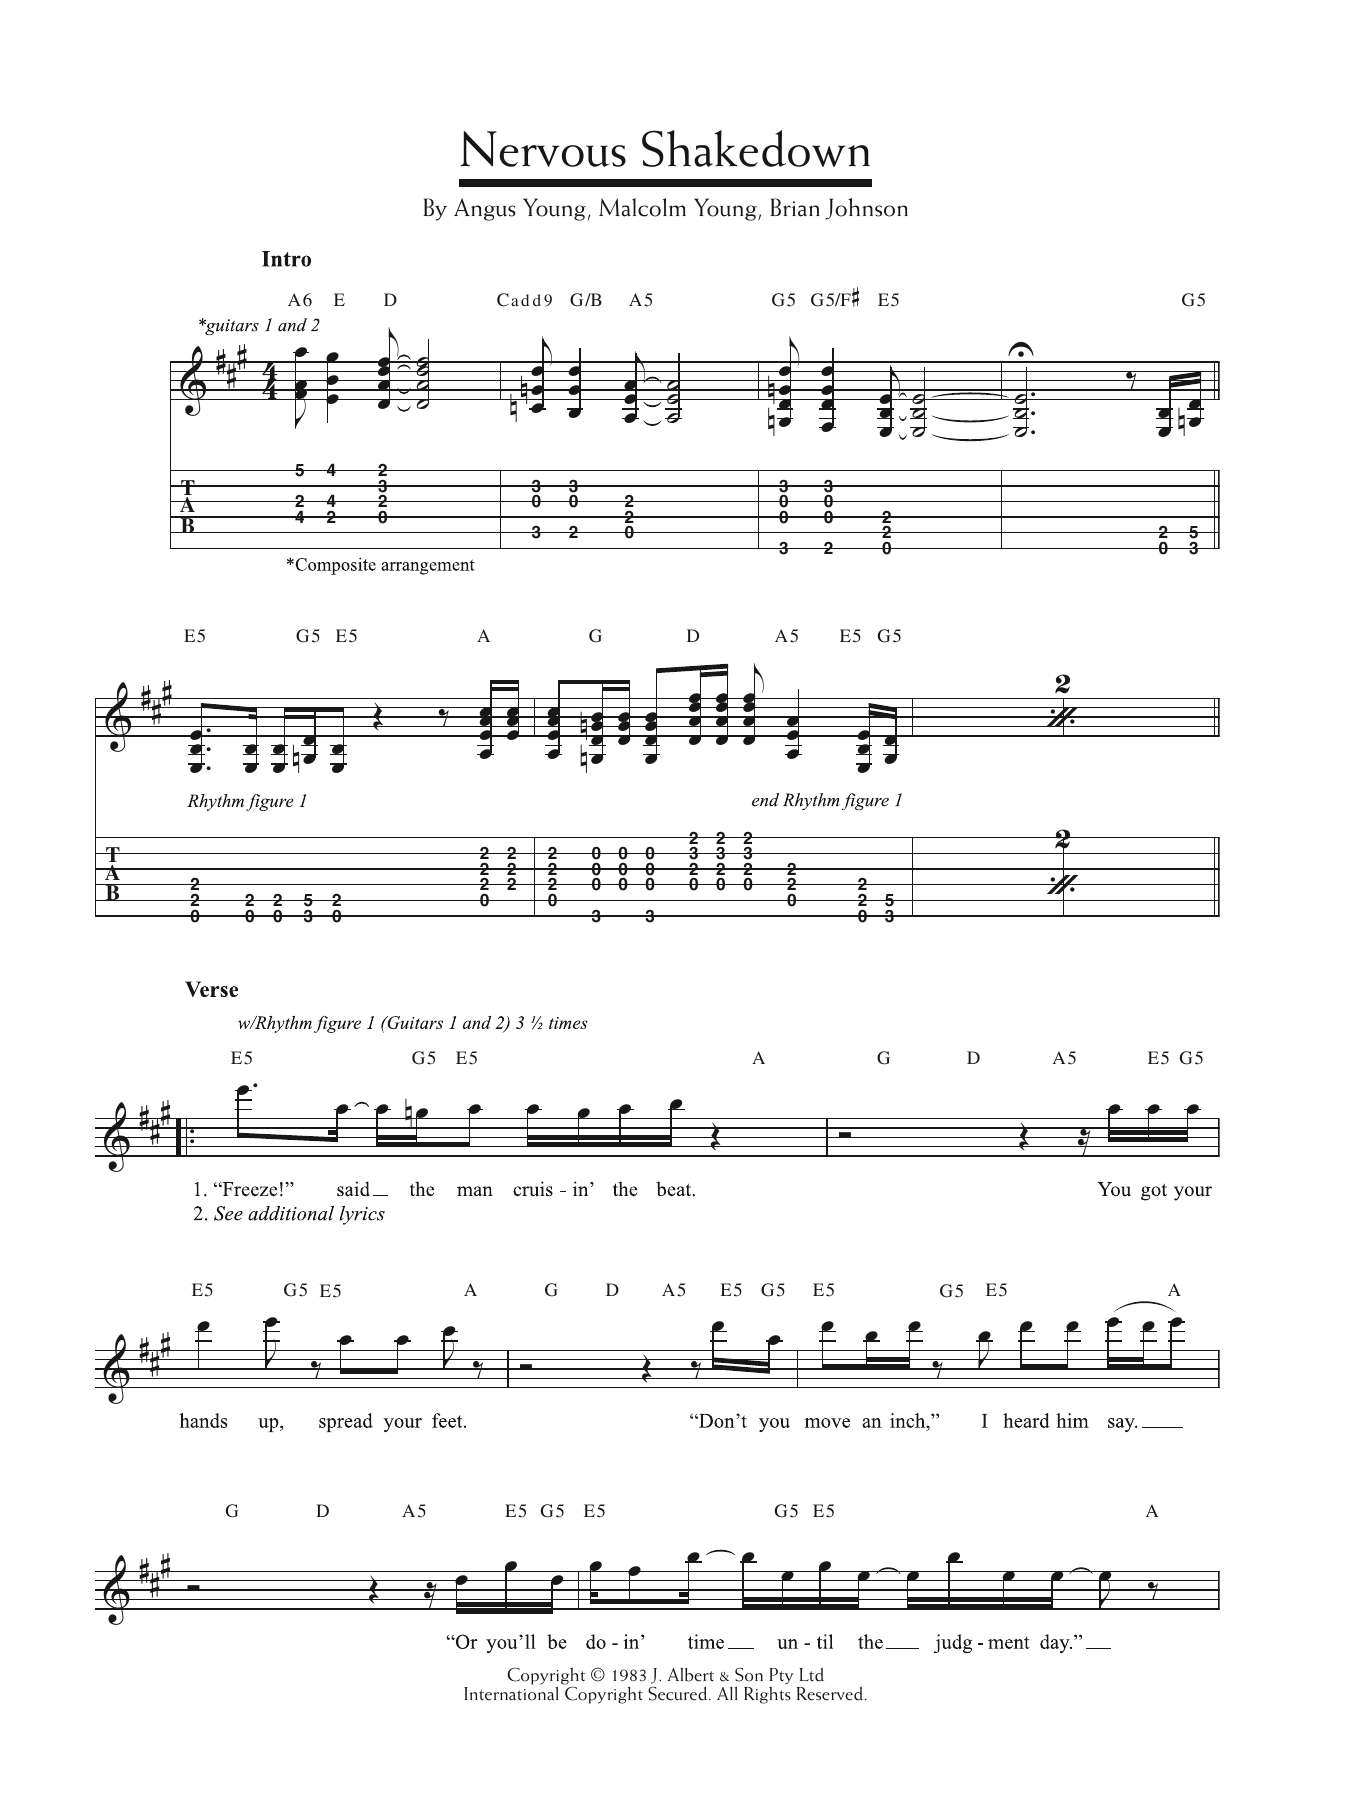 AC/DC Nervous Shakedown Sheet Music Notes & Chords for Guitar Tab - Download or Print PDF